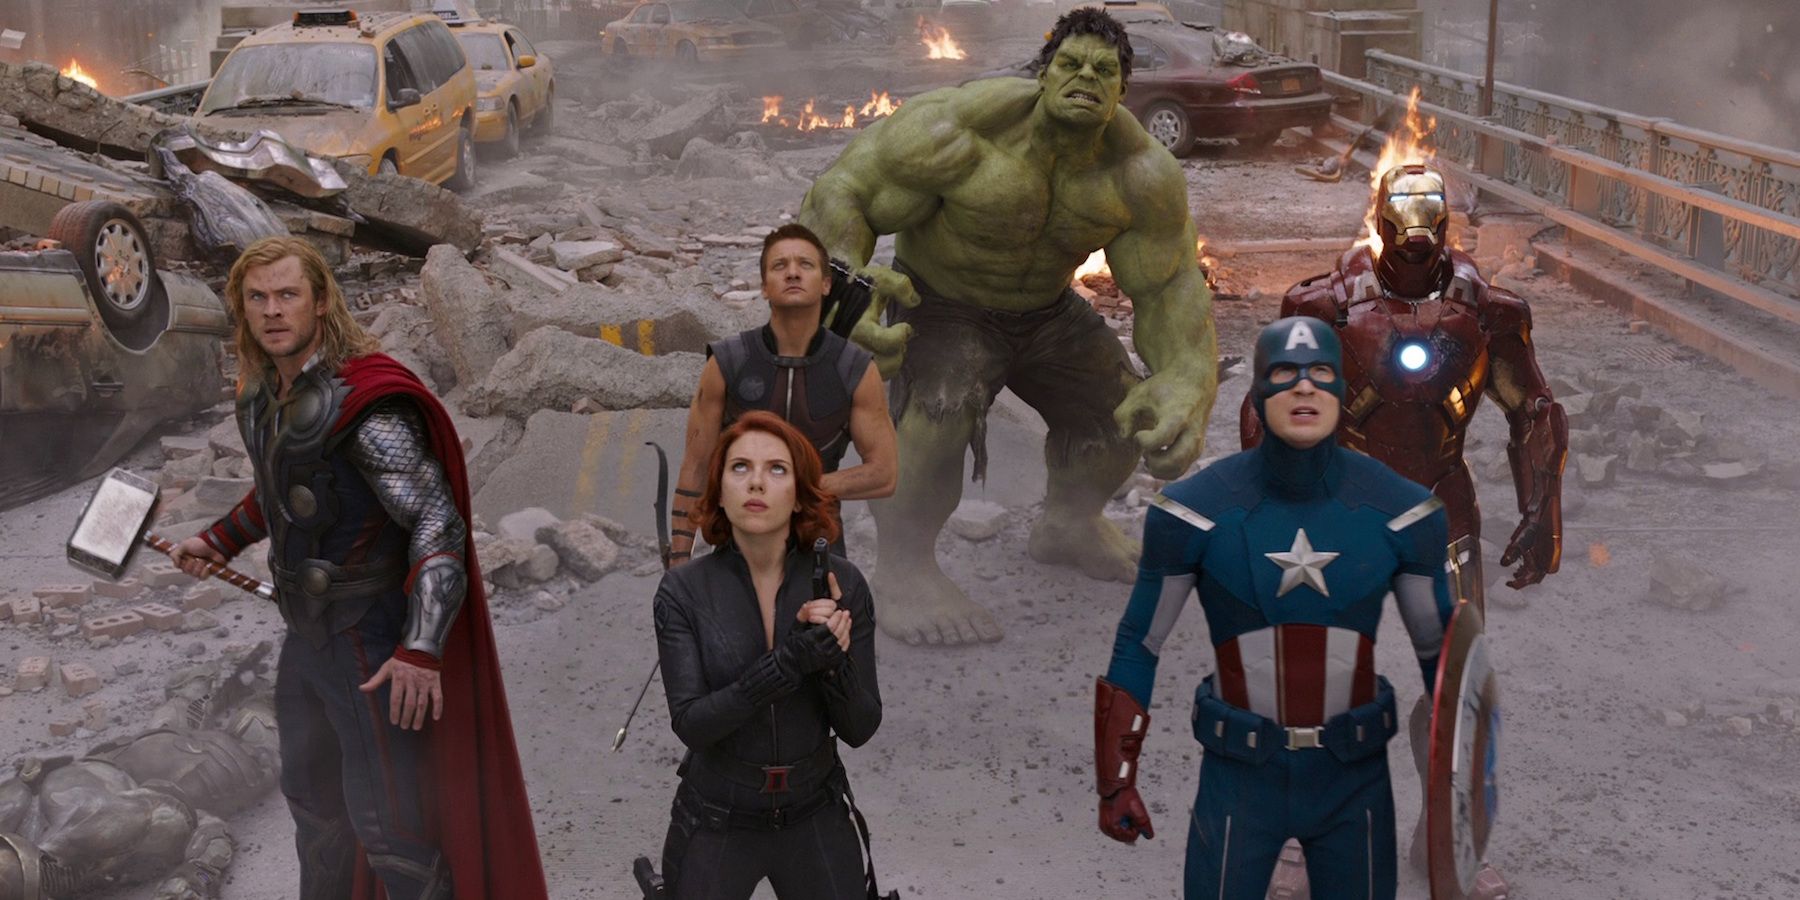 The Avengers assemble. 